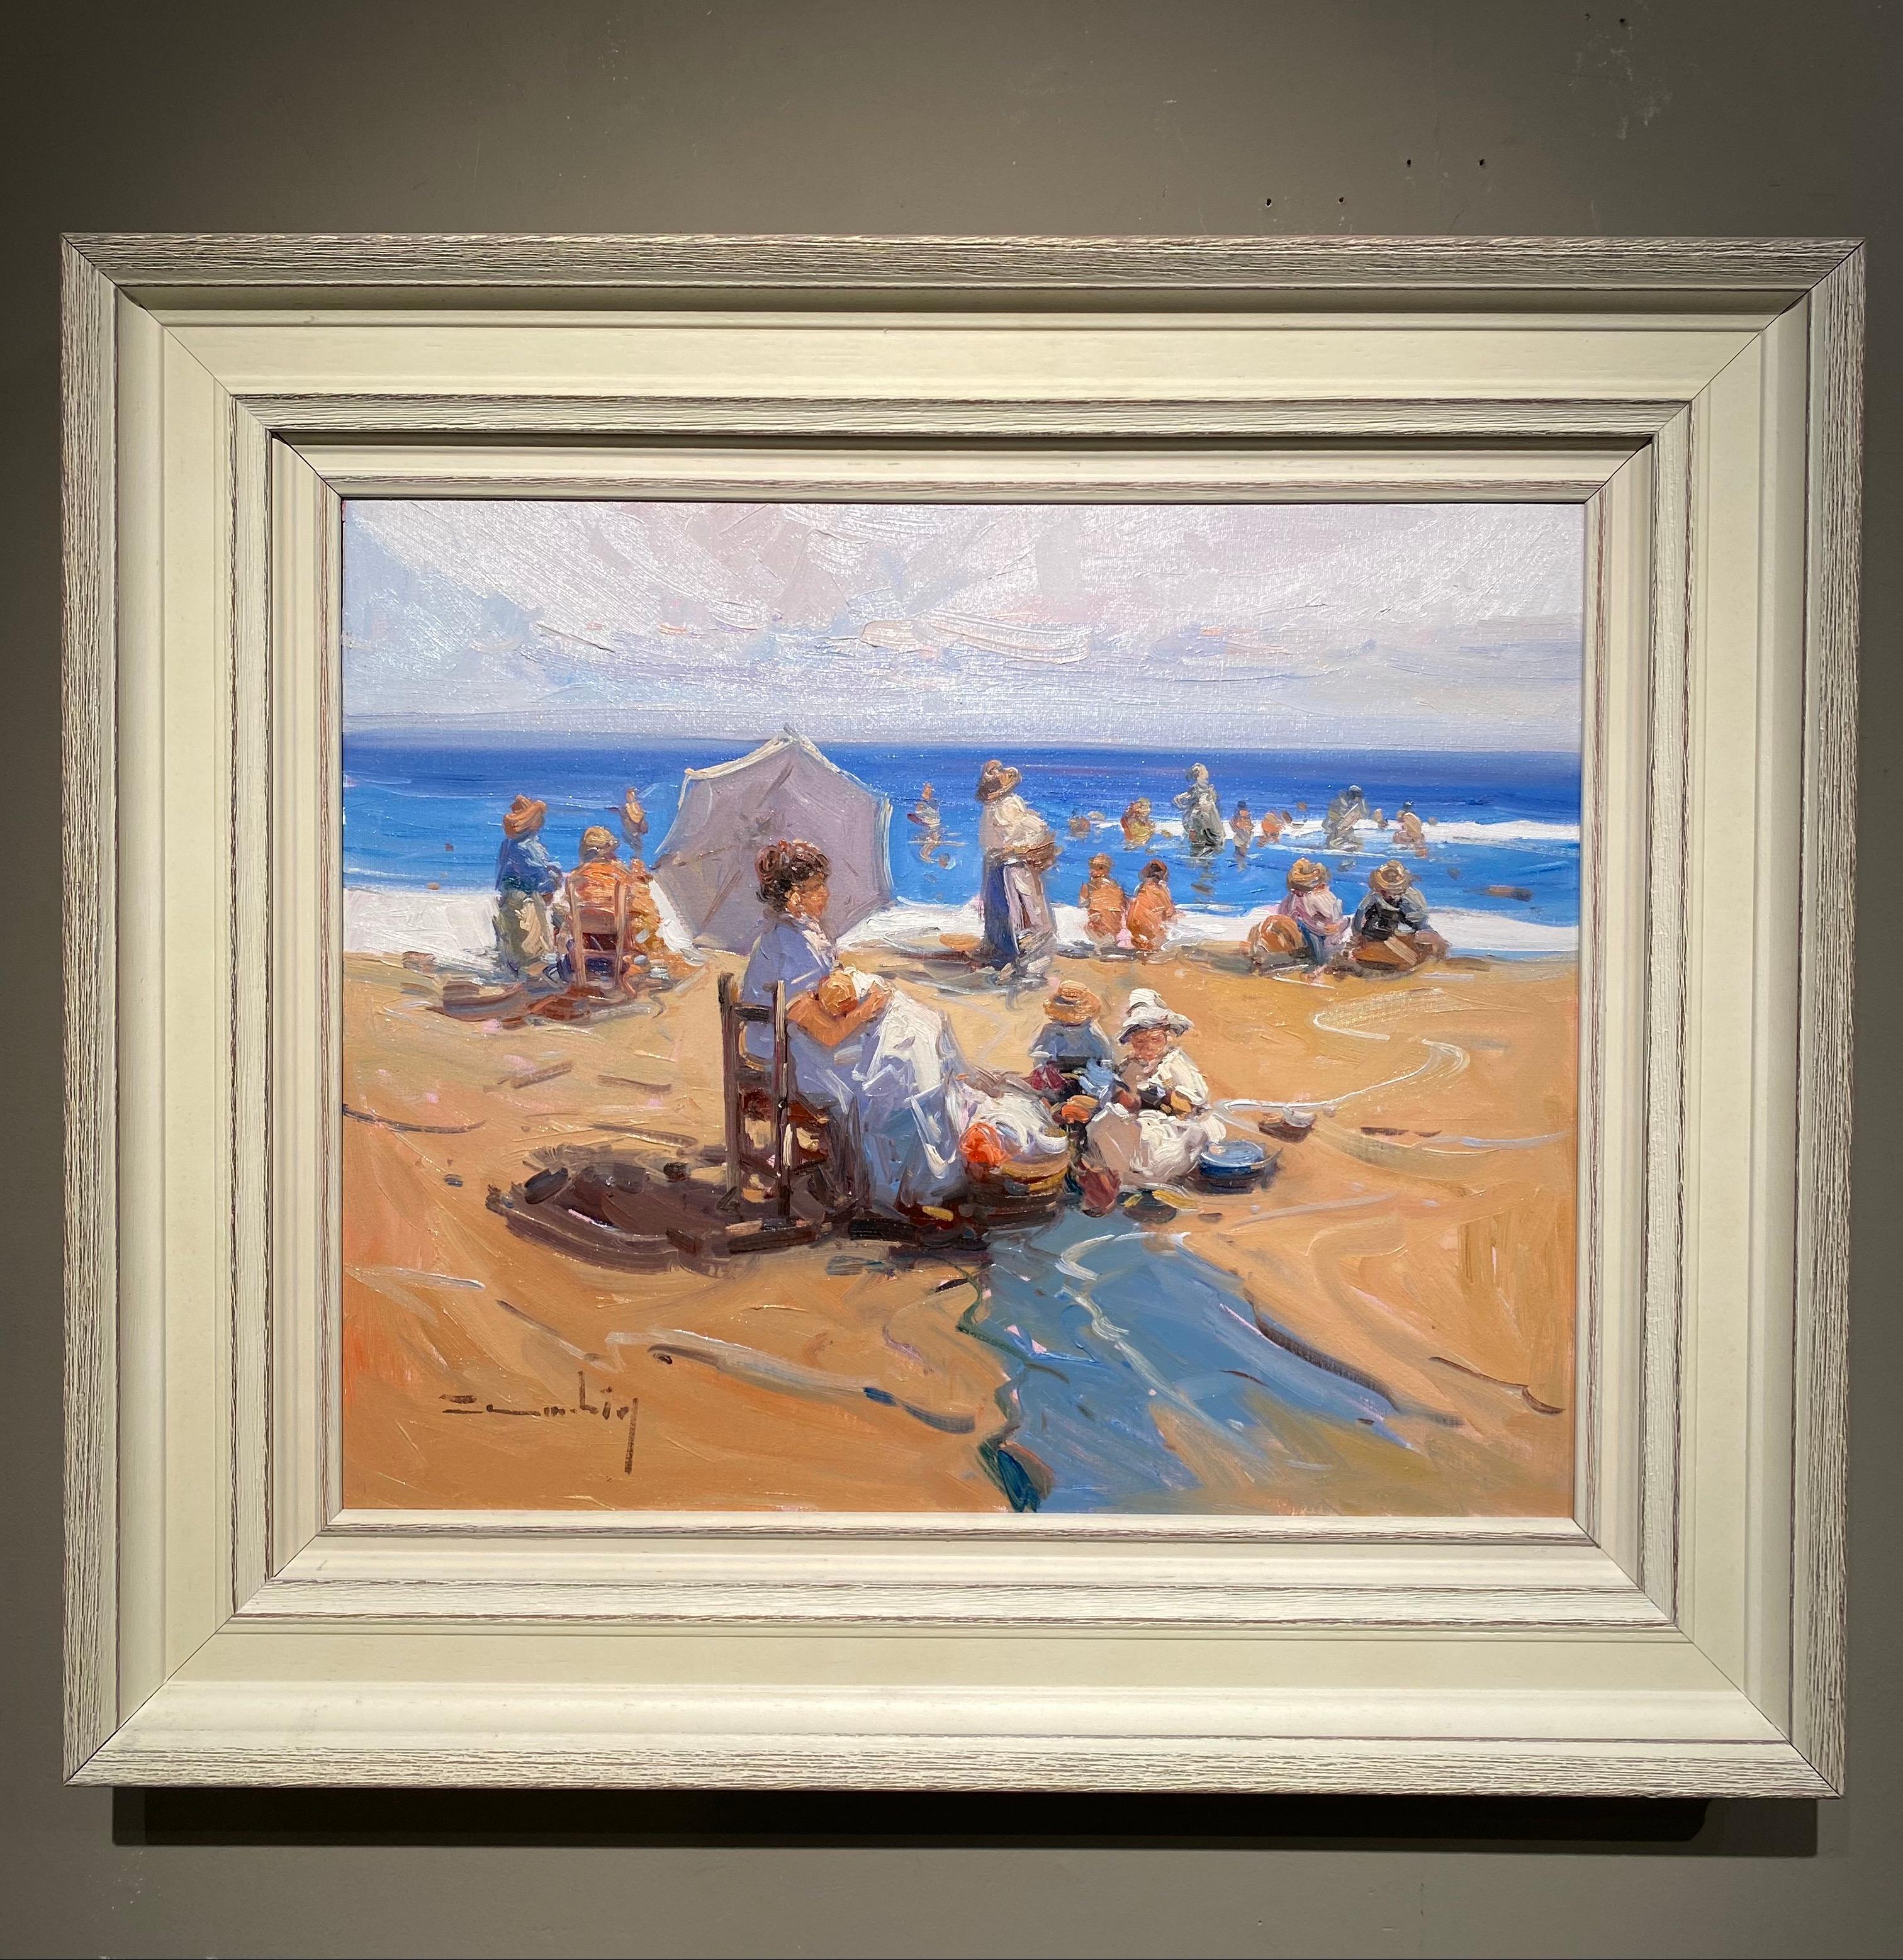 'Creating Memories' Contemporary Impressionist beach landscape of figures, sea